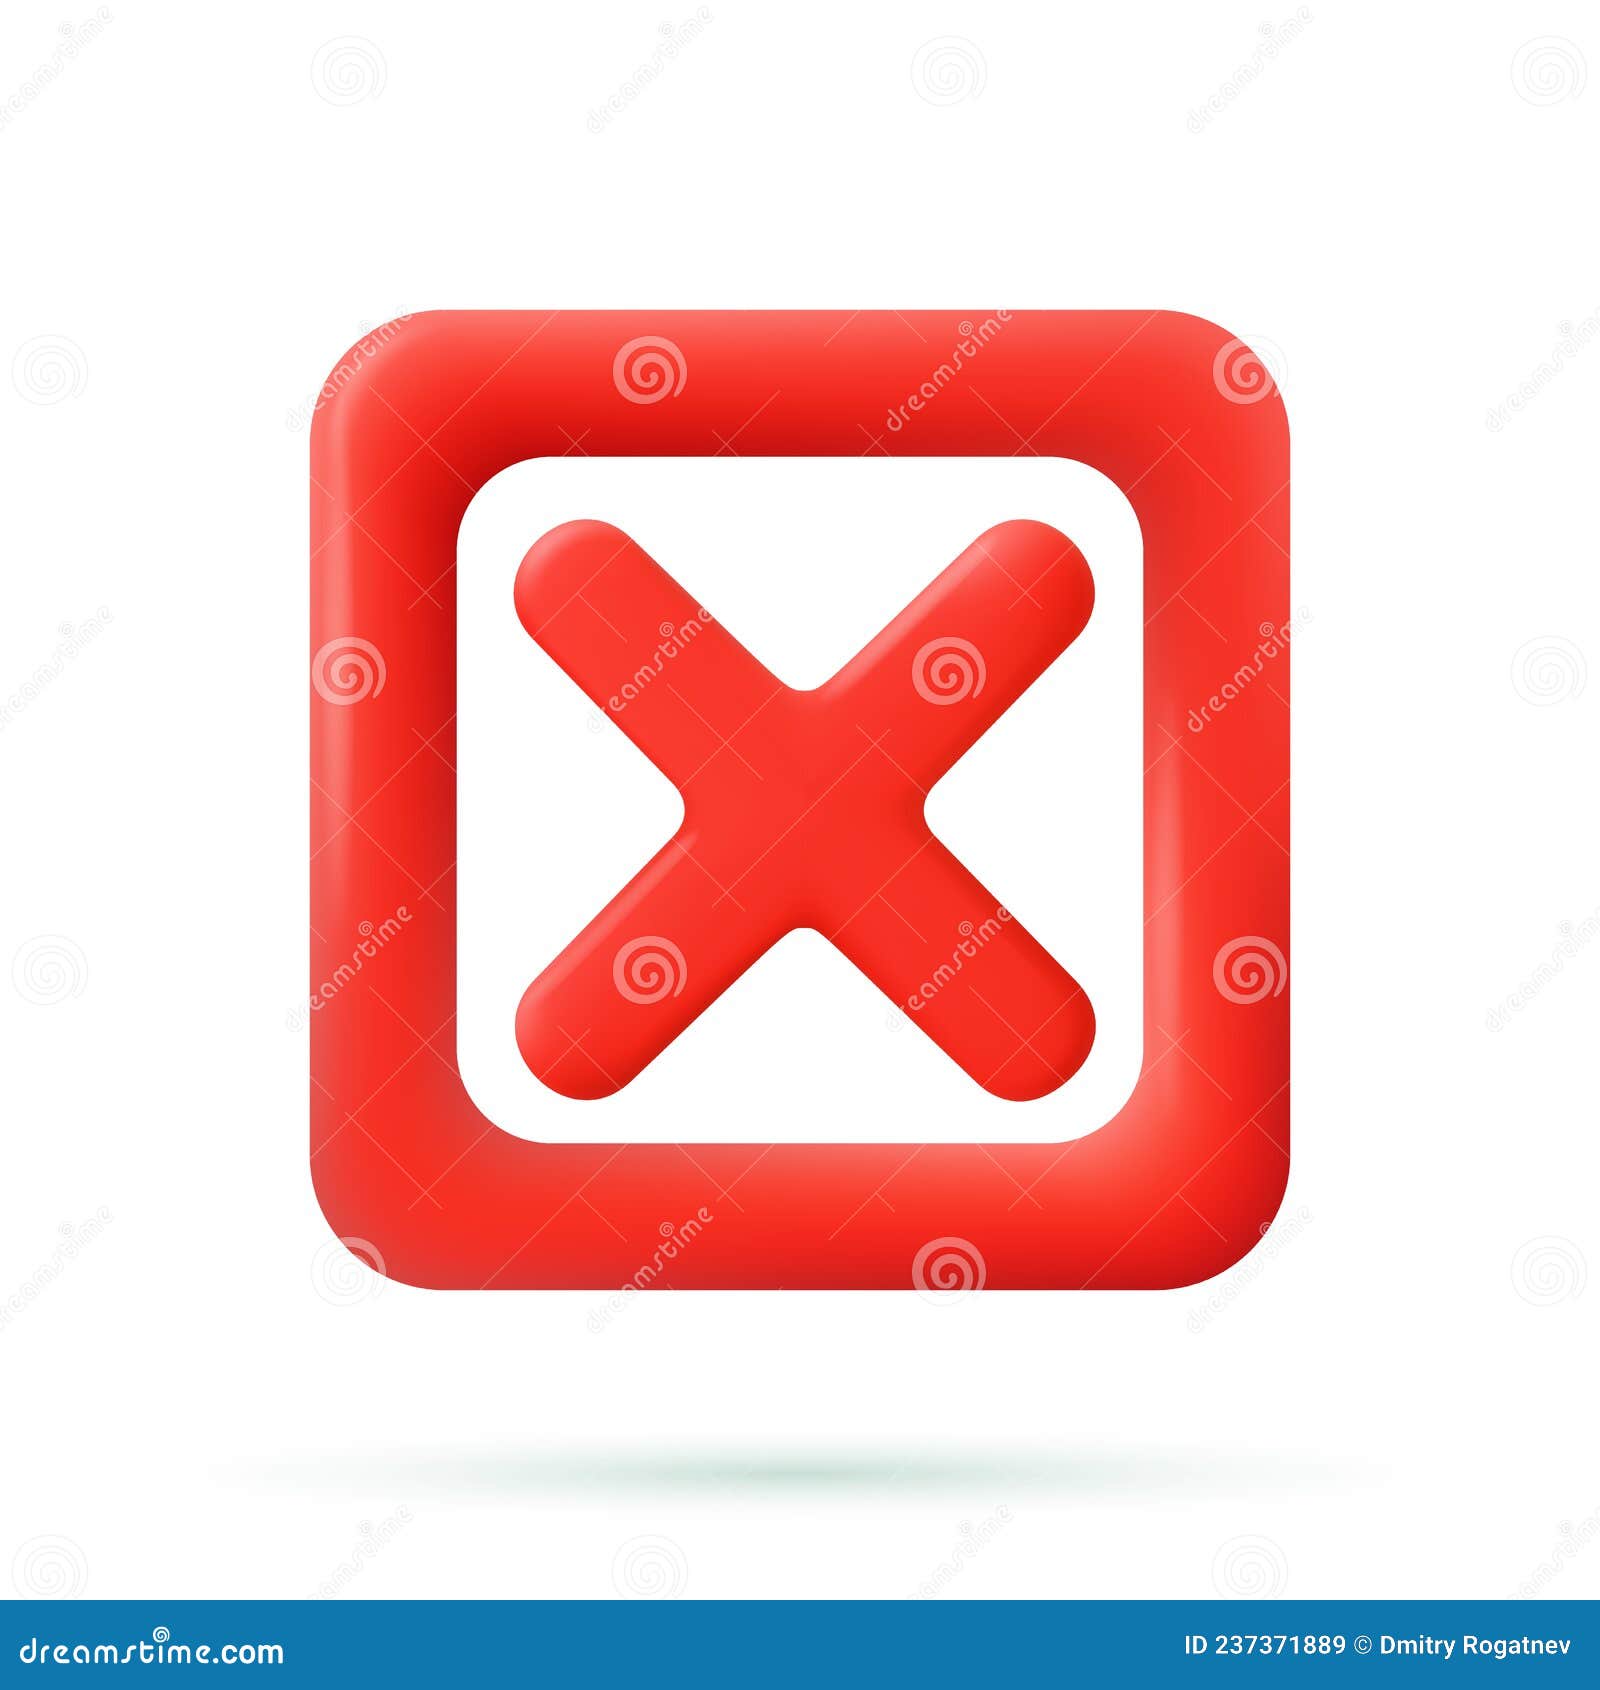 Cancel cross icon stock vector. Illustration of incorrect - 237371889